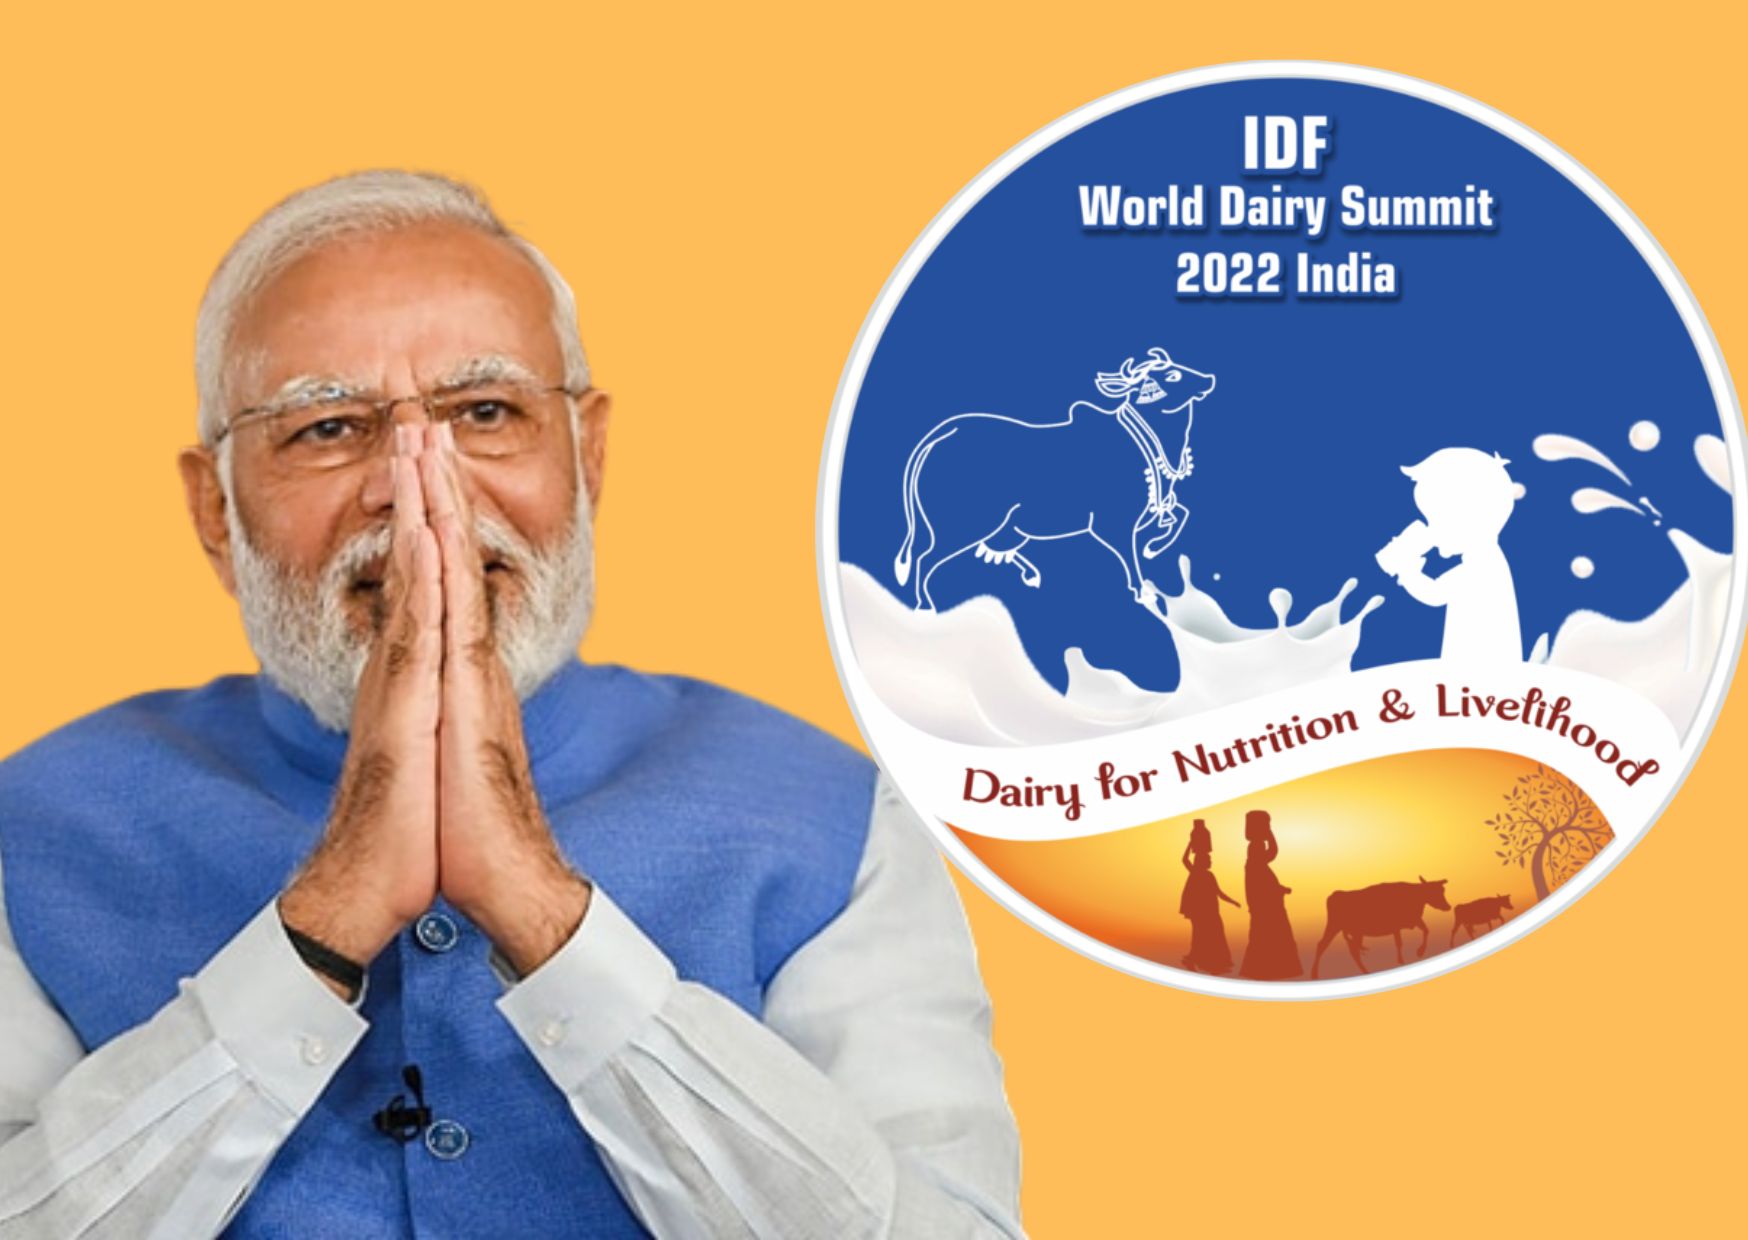 pm modi to inaugurate idf world dairy summit 2022 on 12 september